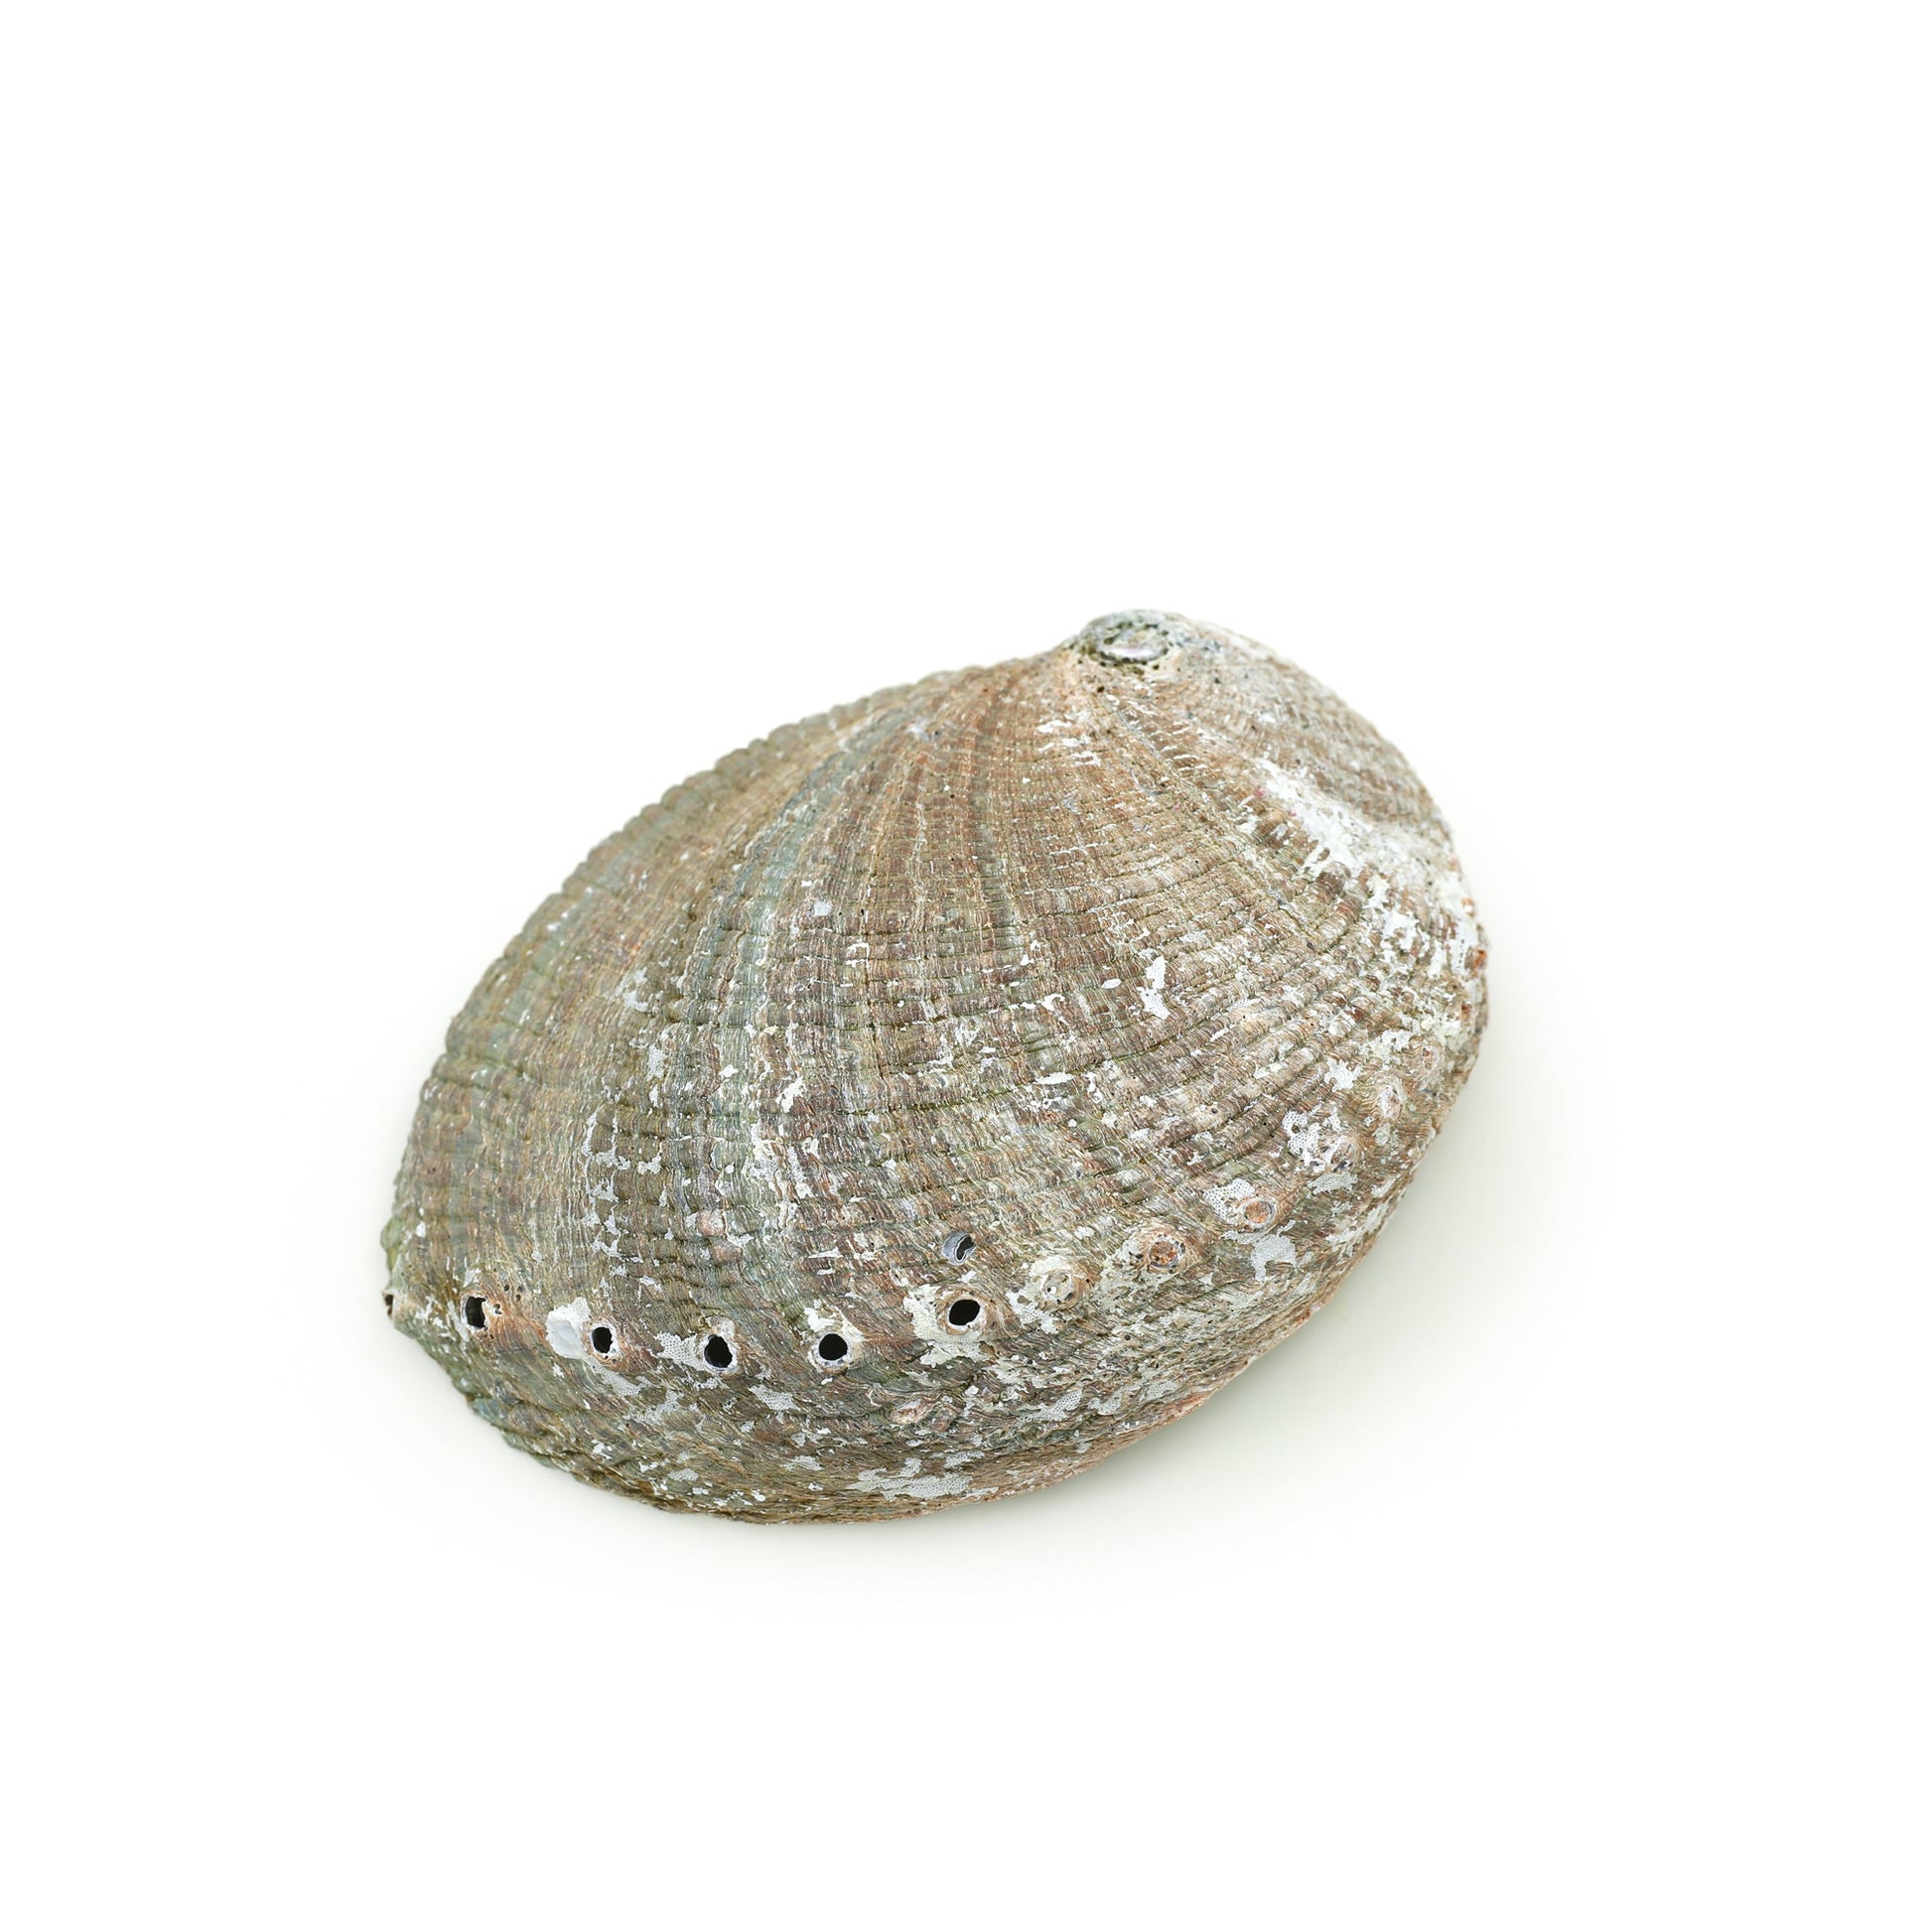 Burner - Abalone shell - Large 5"-6.5" - Tree Spirit Wellness